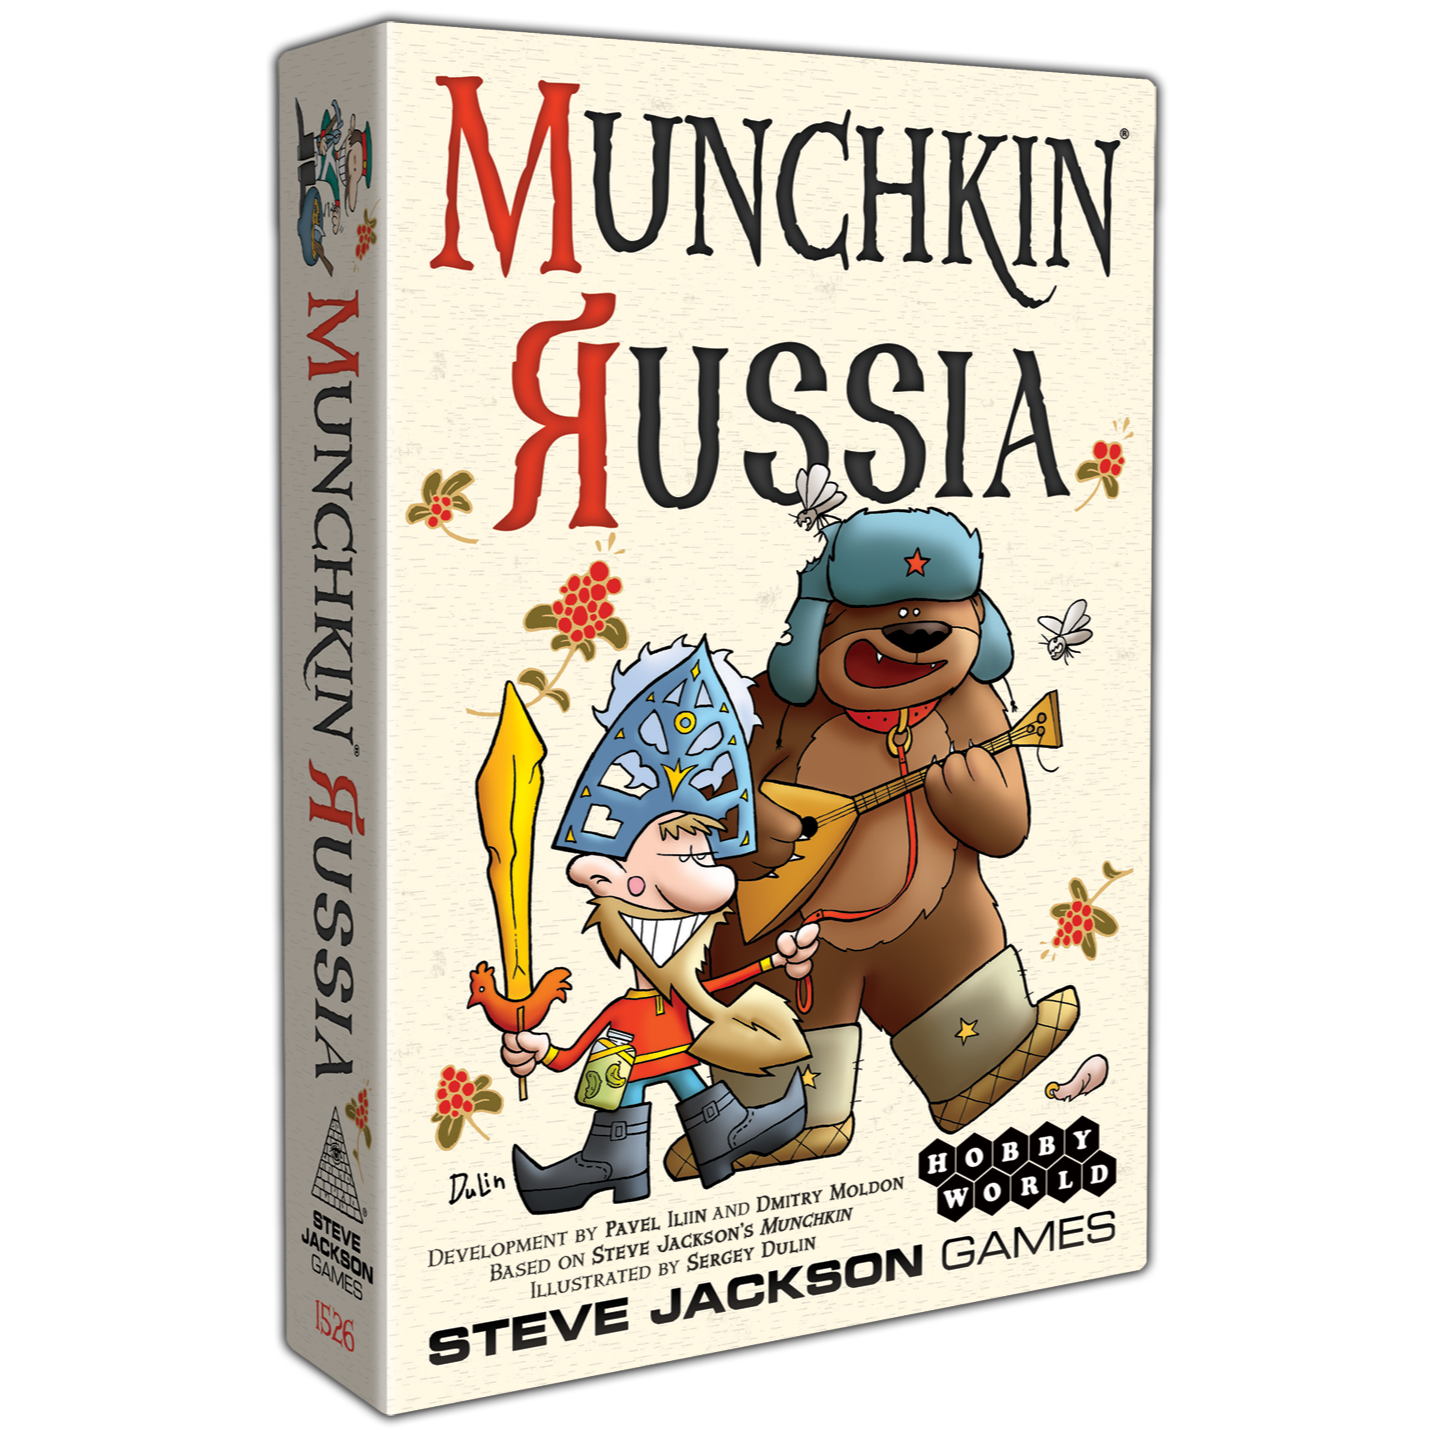 Munchkin Russia